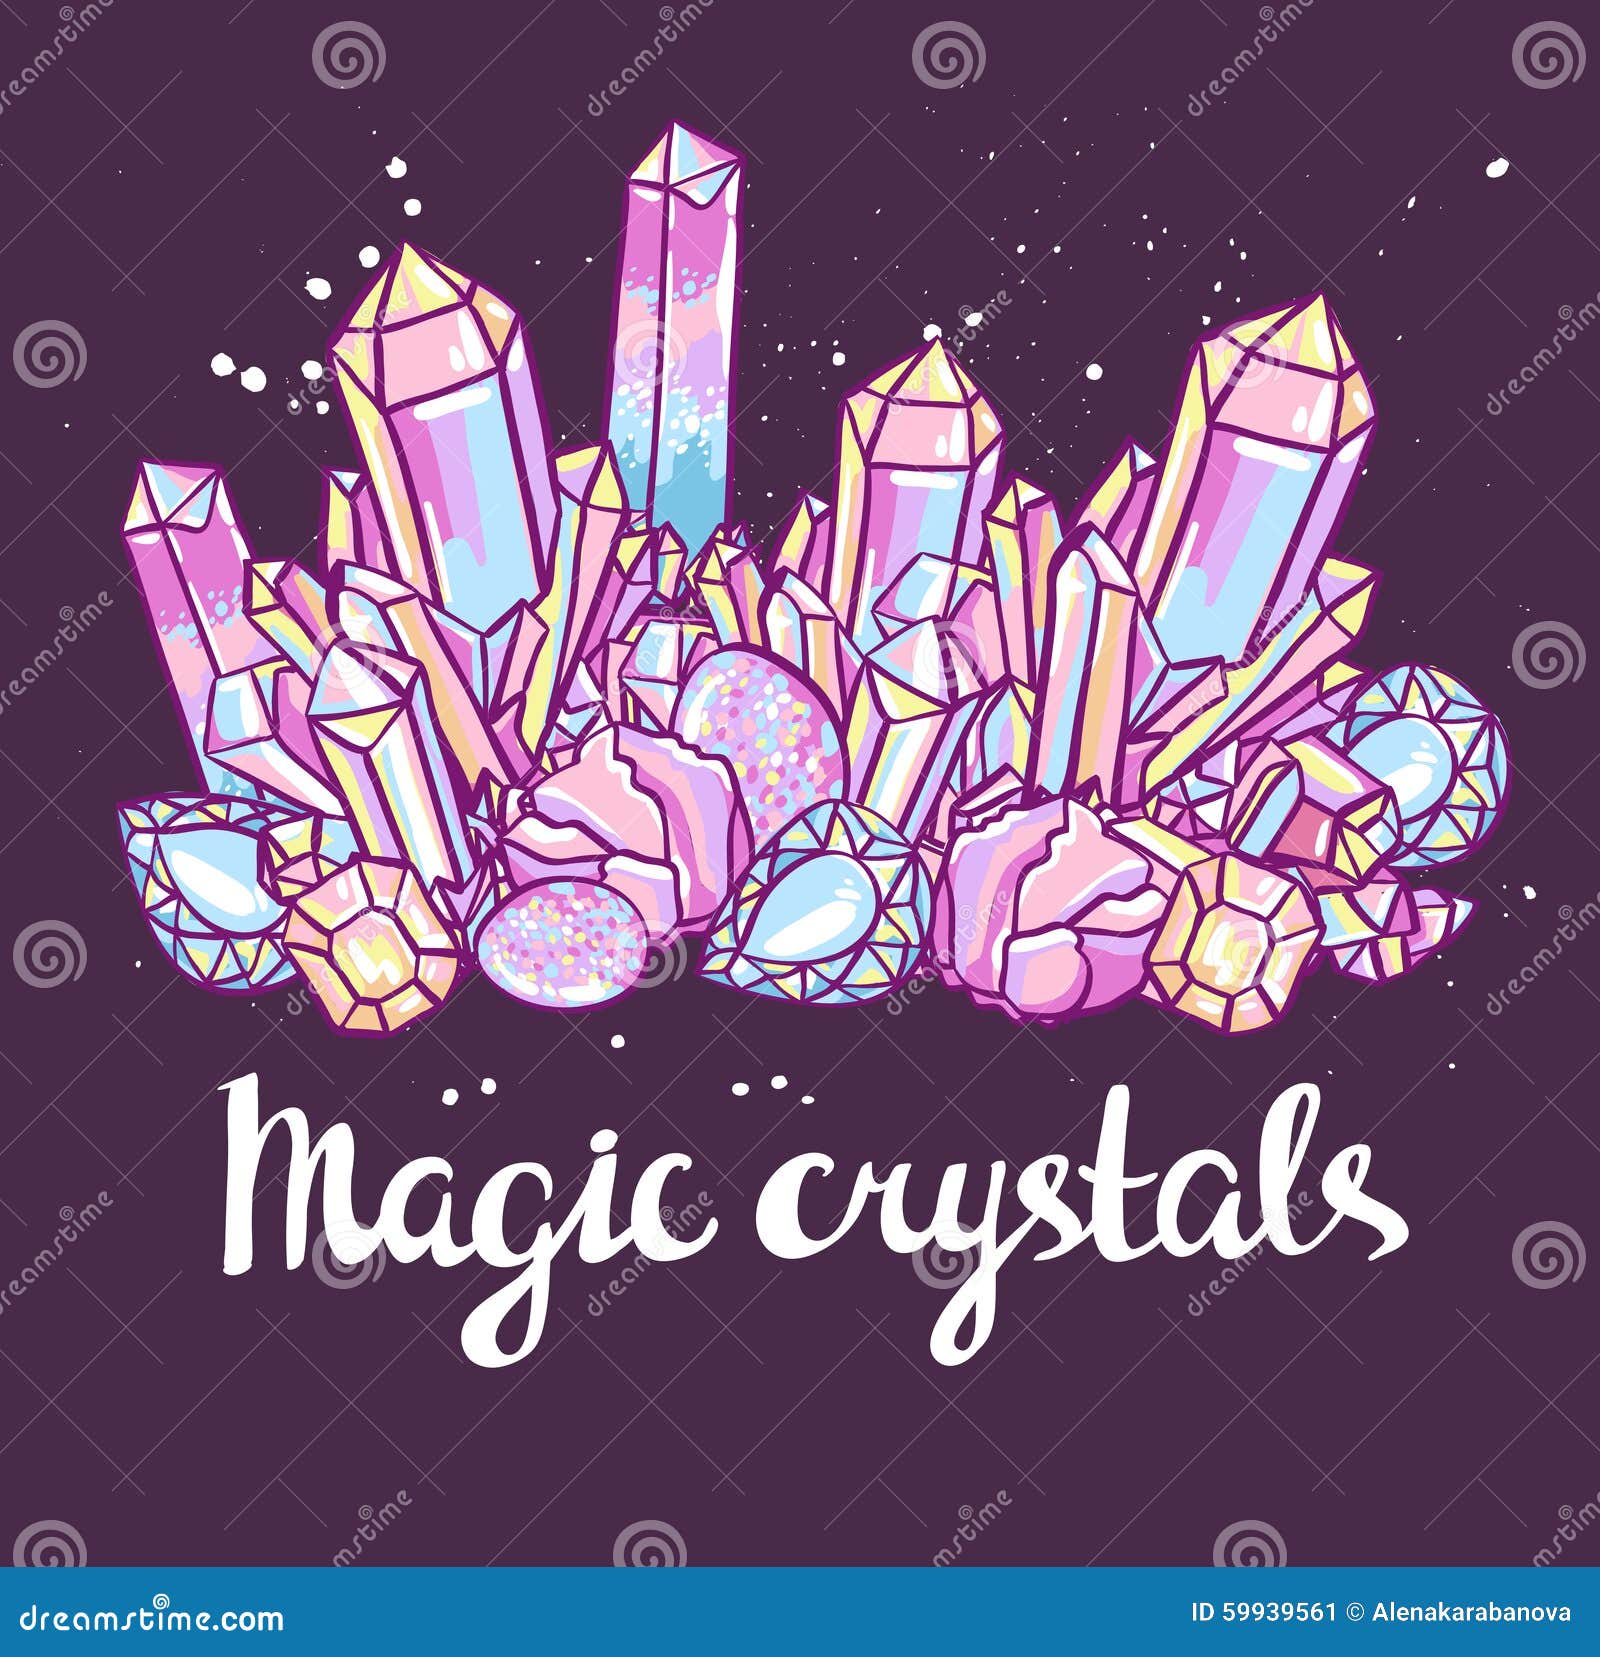 poster - magic crystals. bright  .